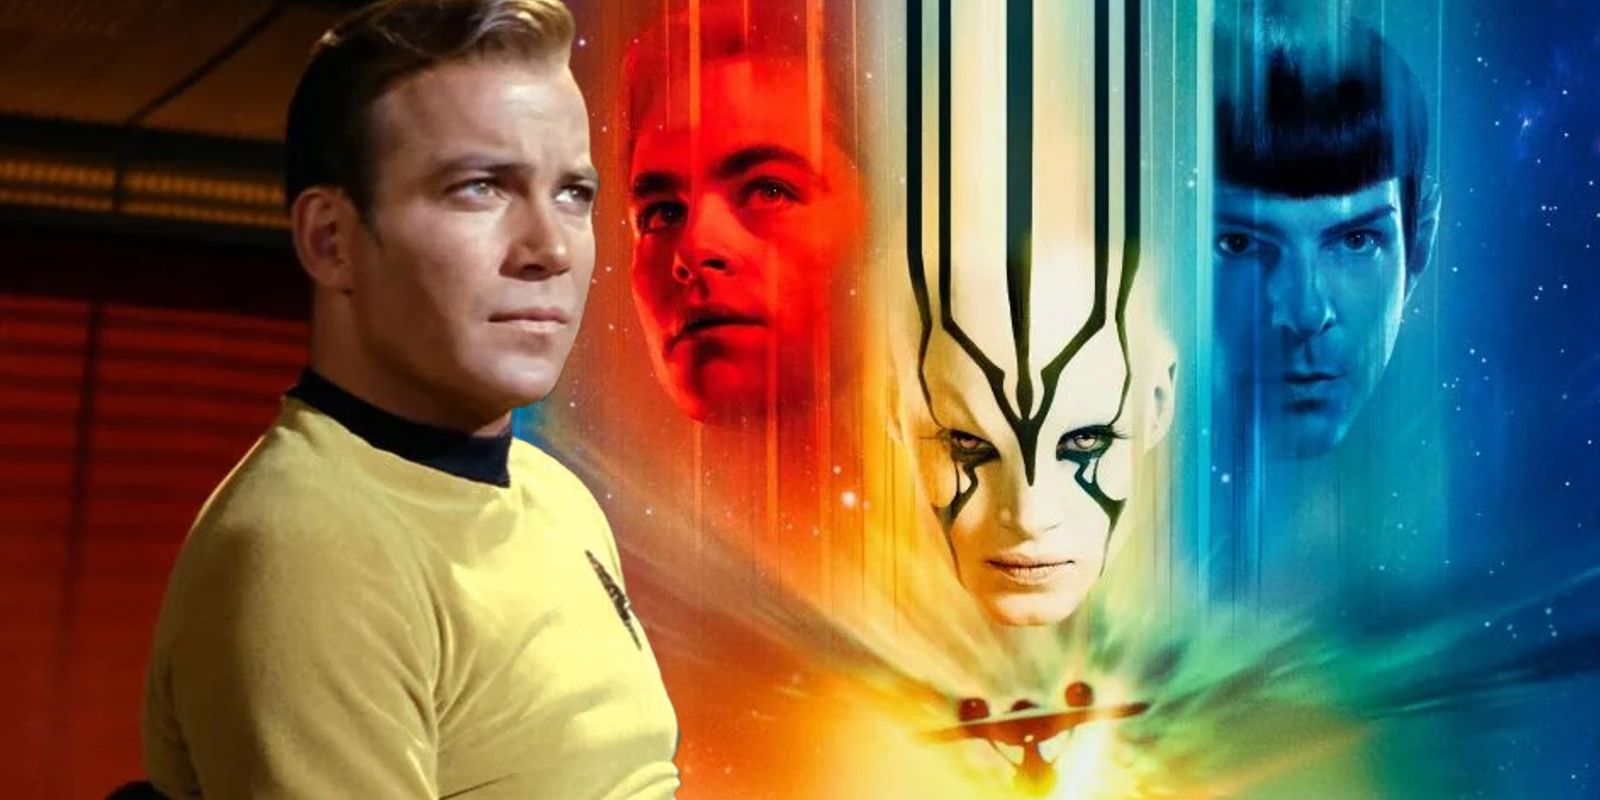 Blended image of William Shatner and Star Trek Beyond